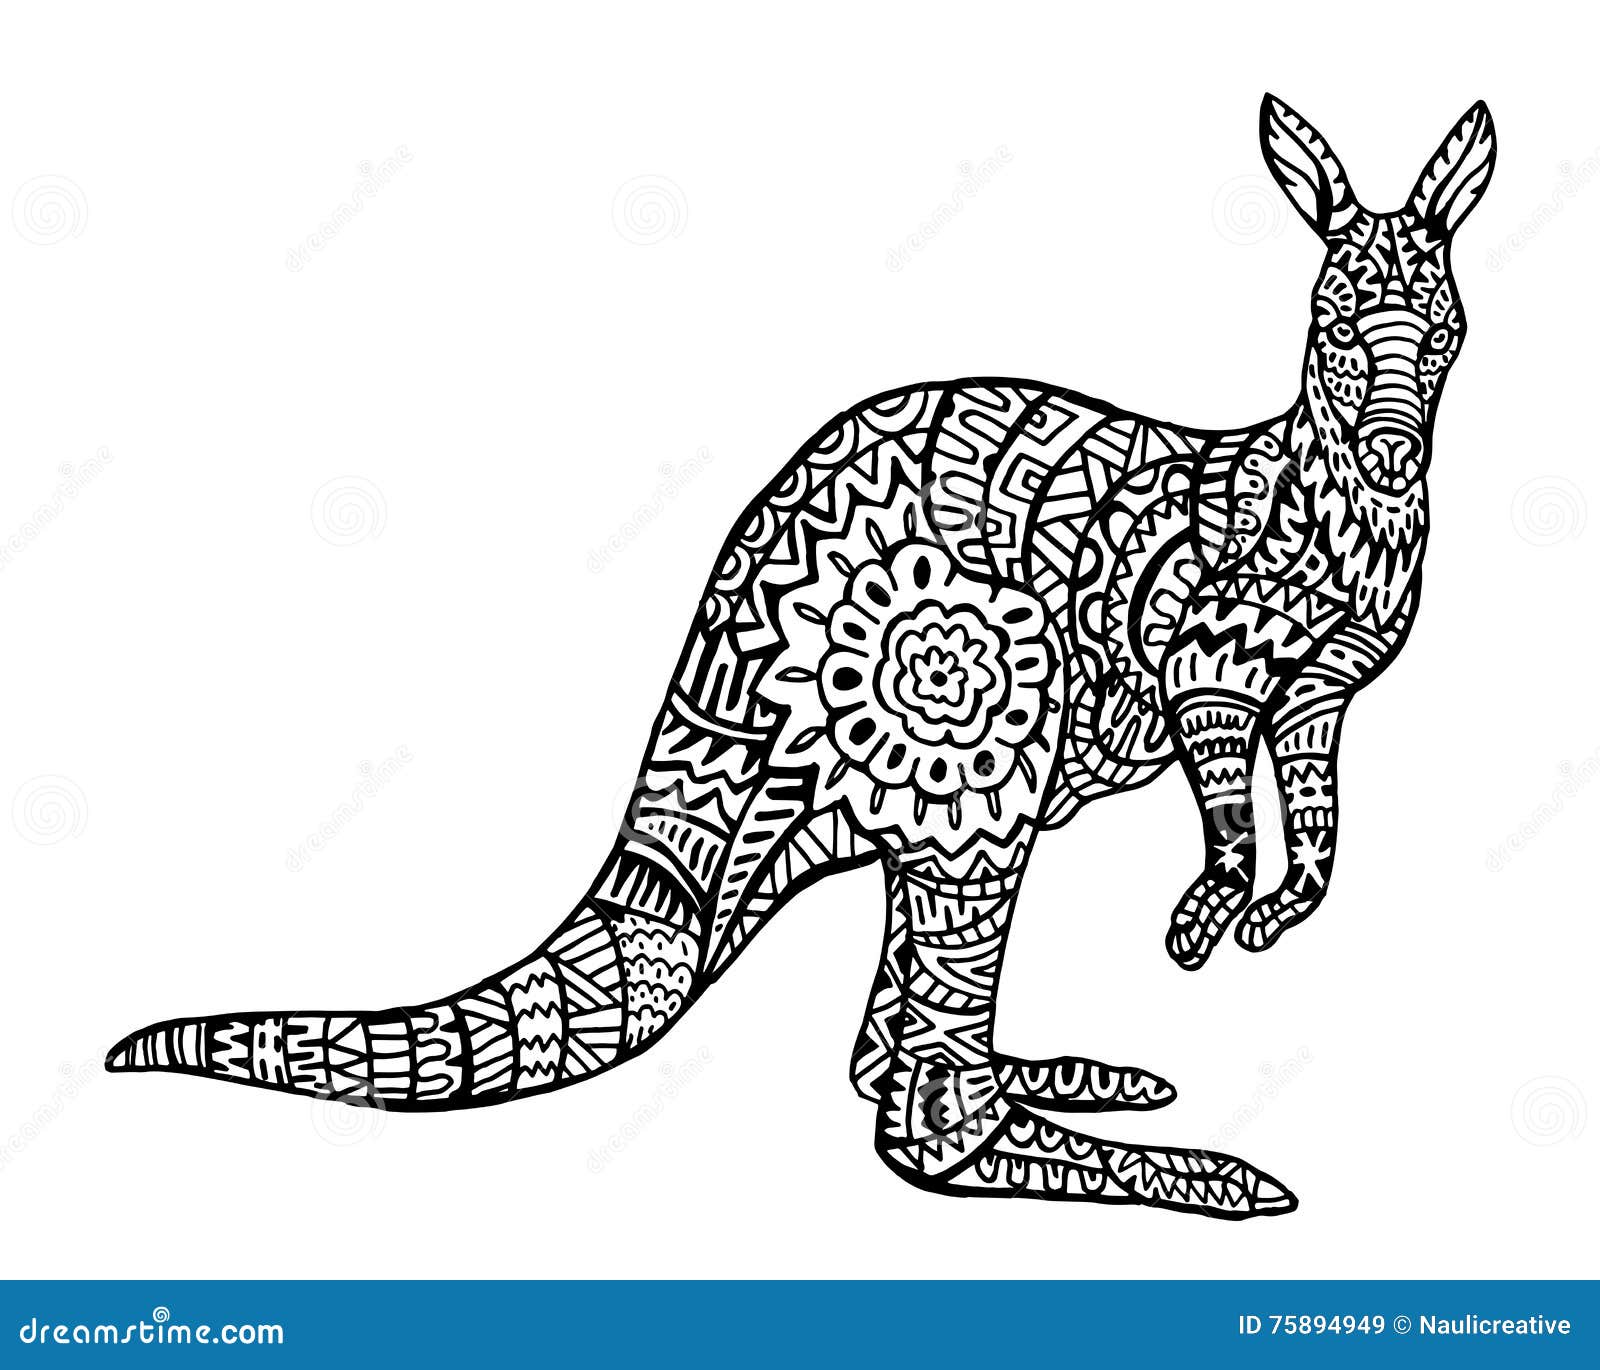 buy doodle art australia